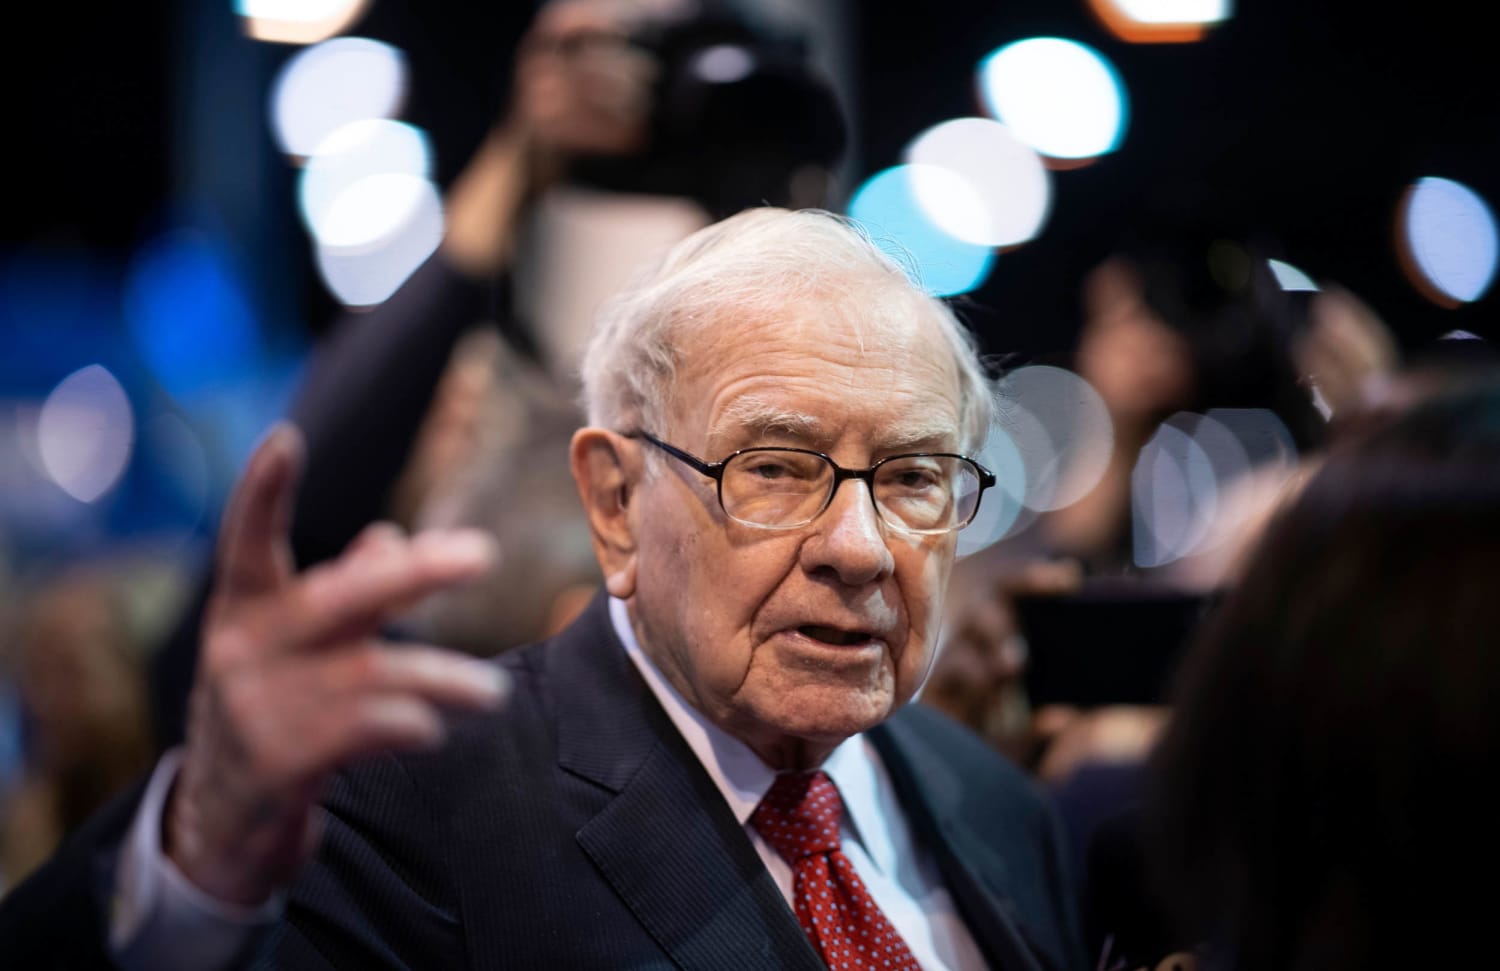 Berkshire Hathaway shareholder meeting takeaways: Warren Buffett's remarks